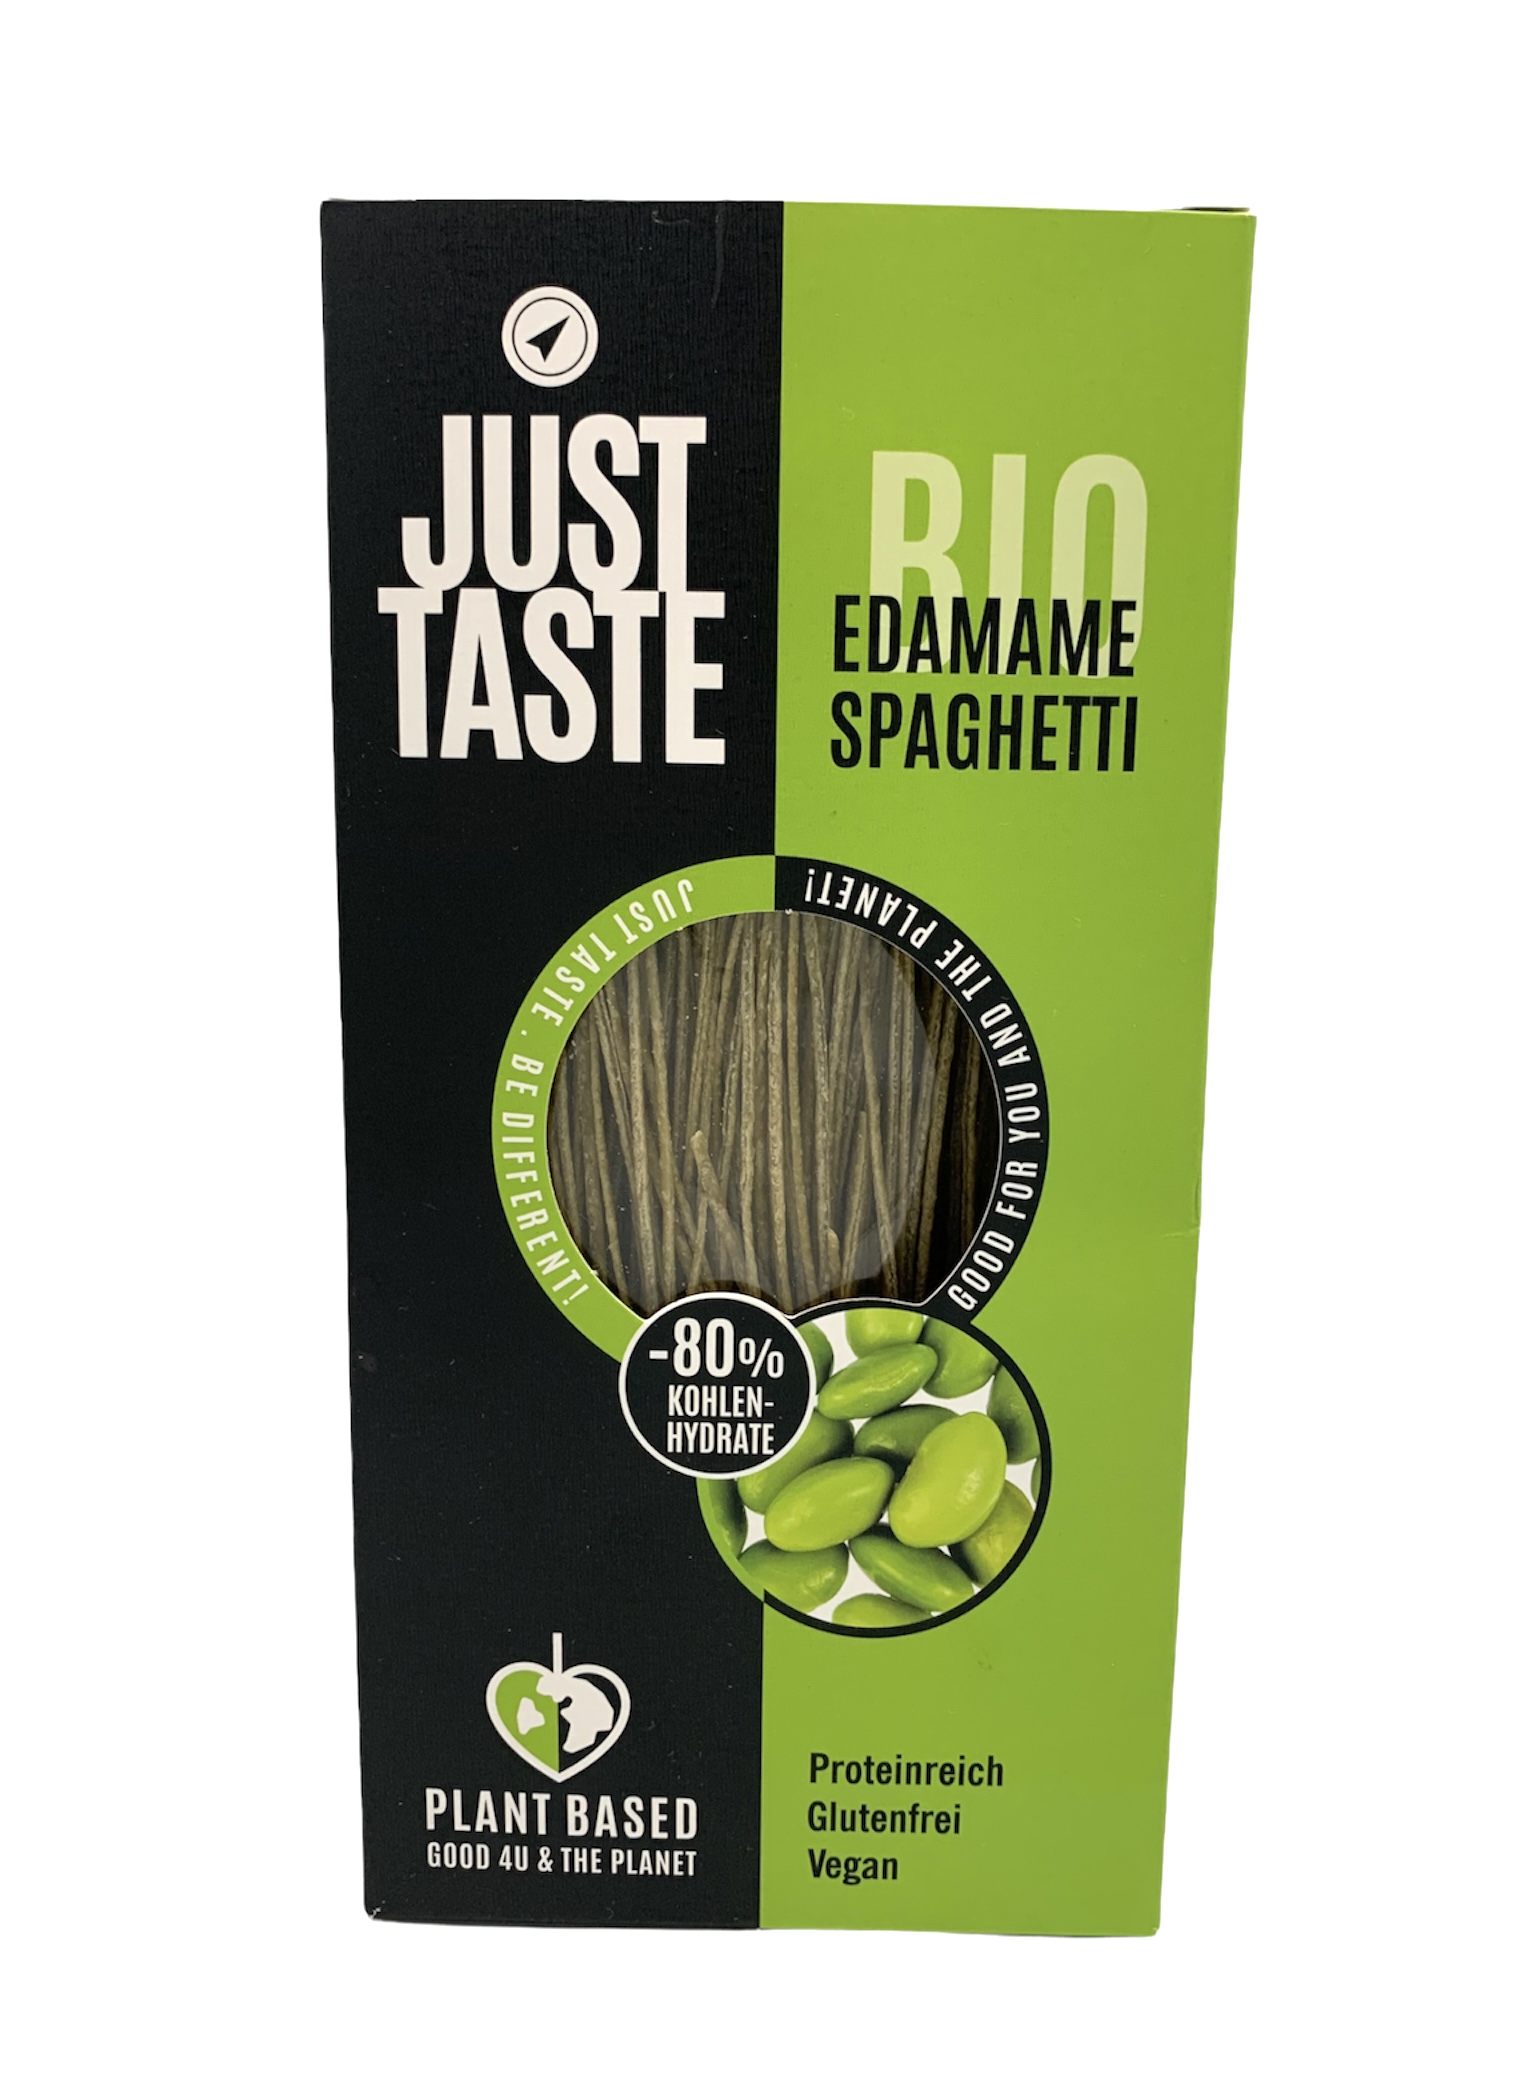  Bio EDAMAME Spaghetti, -80% Kohlenhydrate 